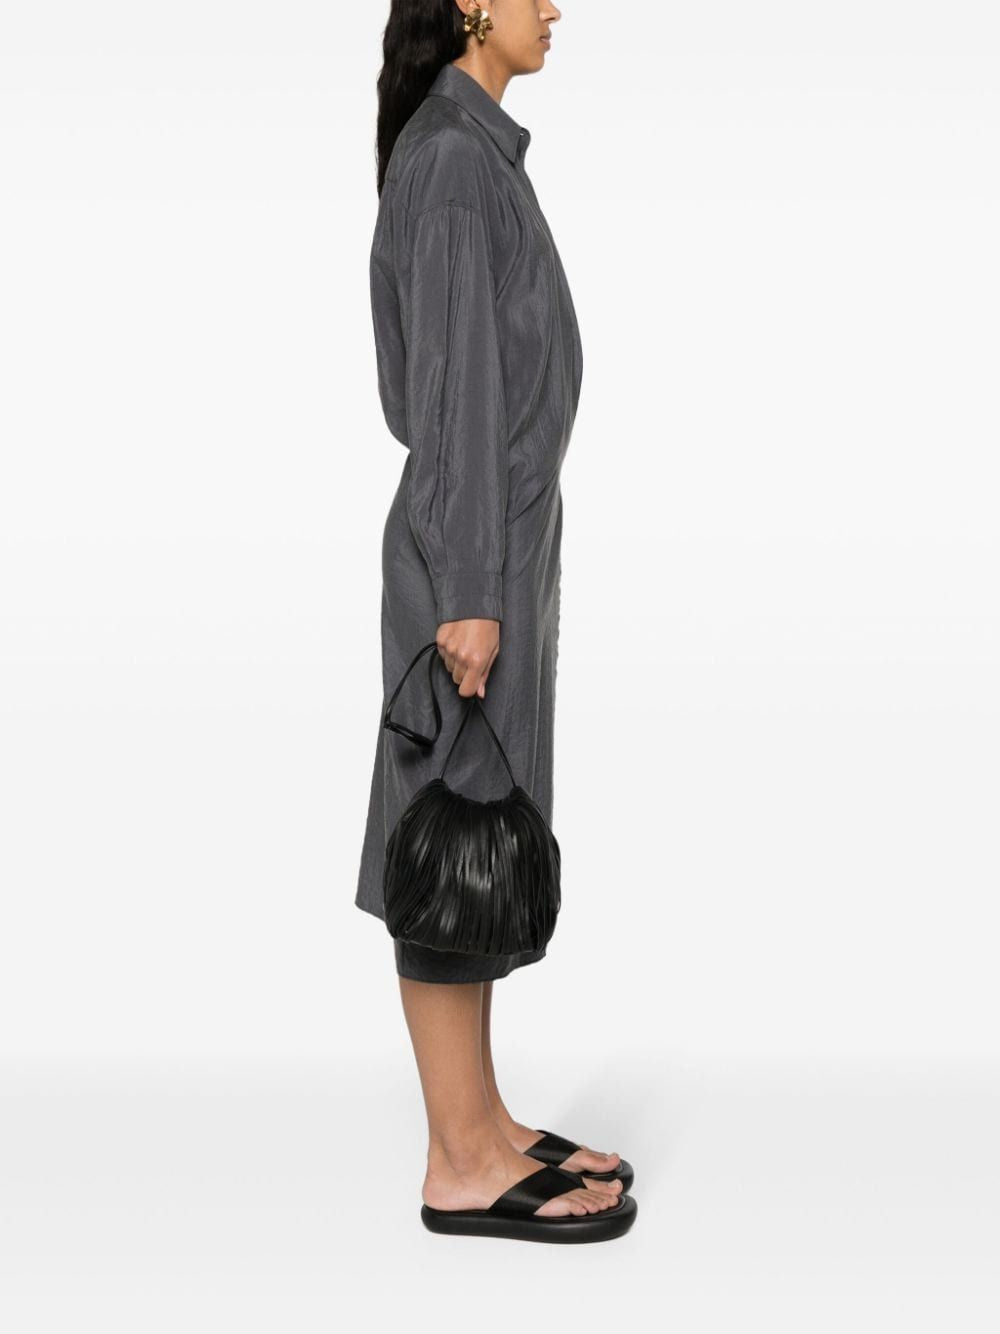 JIL SANDER Luxurious Black Calfskin Handbag with Fringe Detail